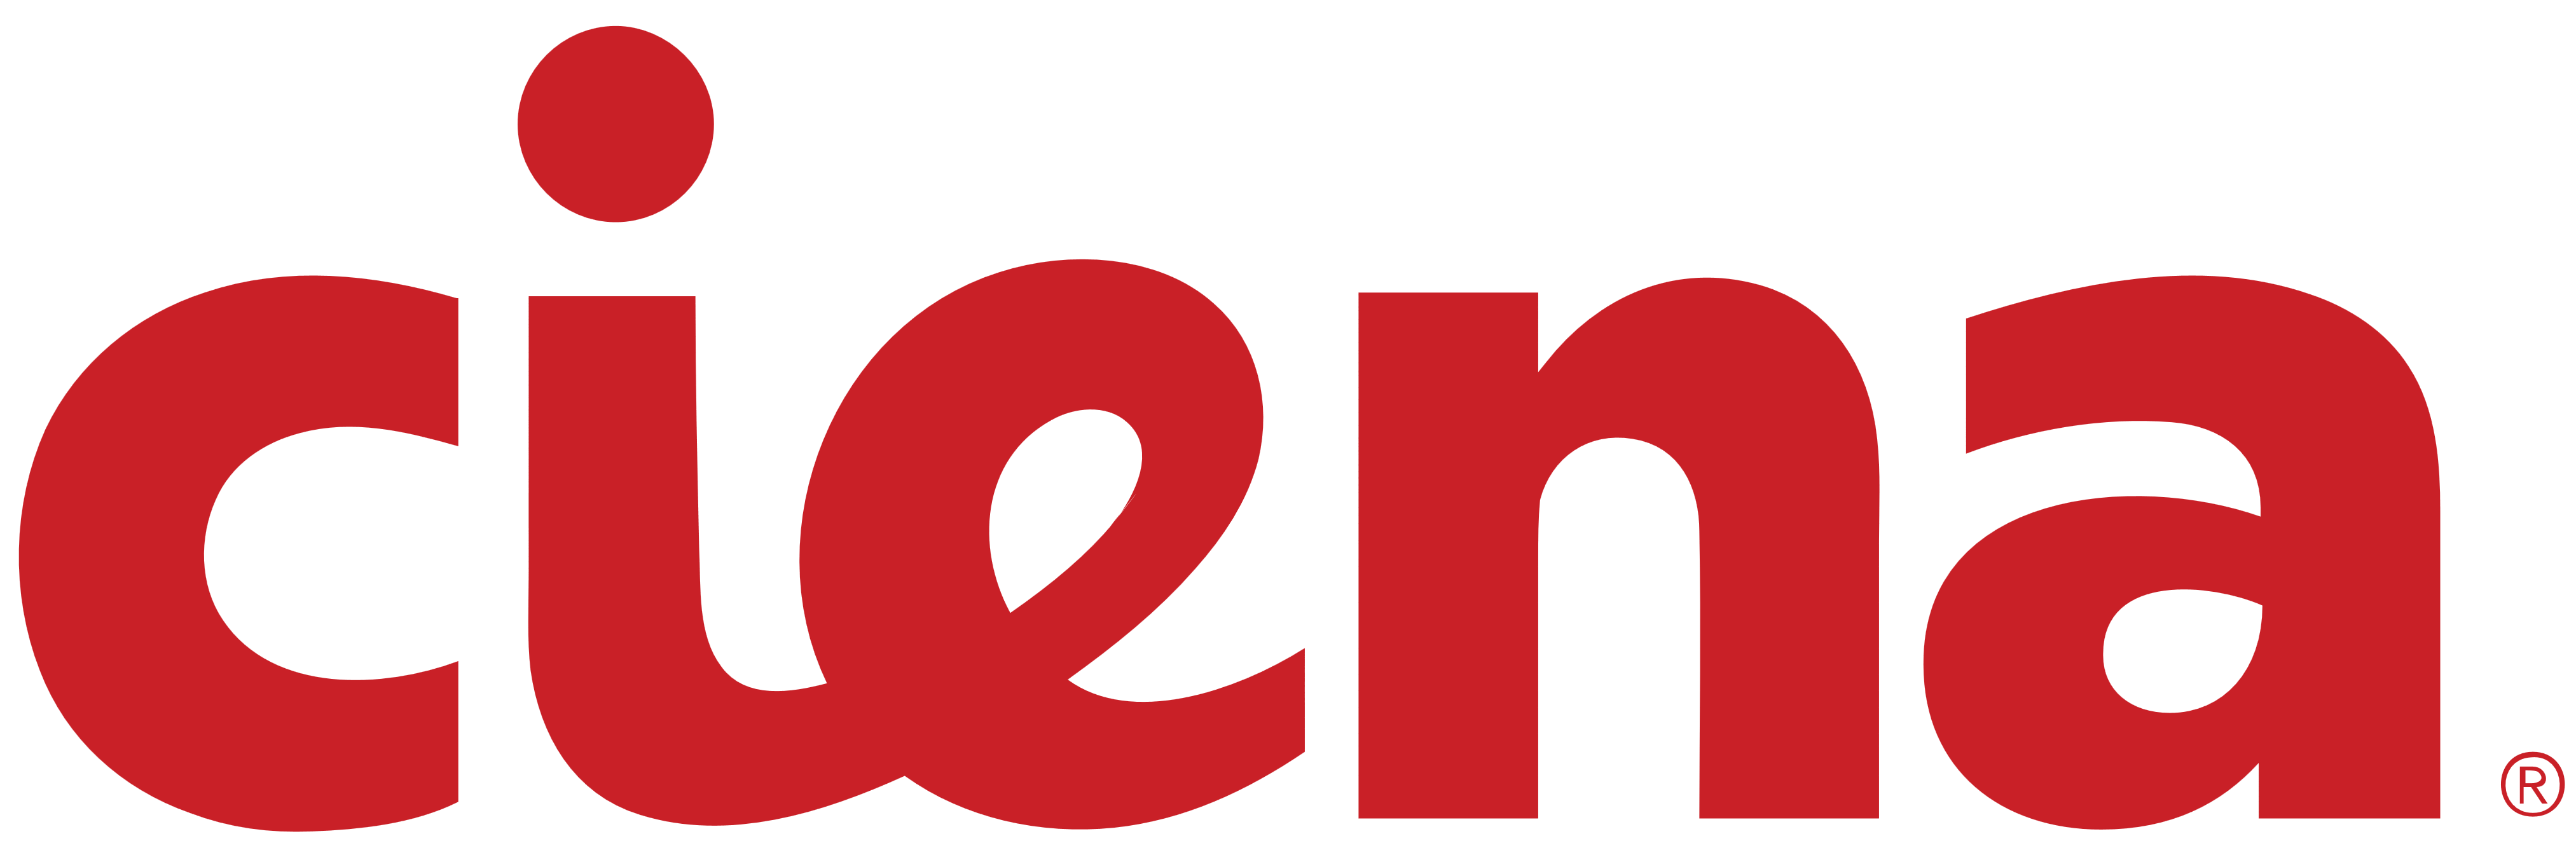 Ciena Logo - Ciena – Logos Download